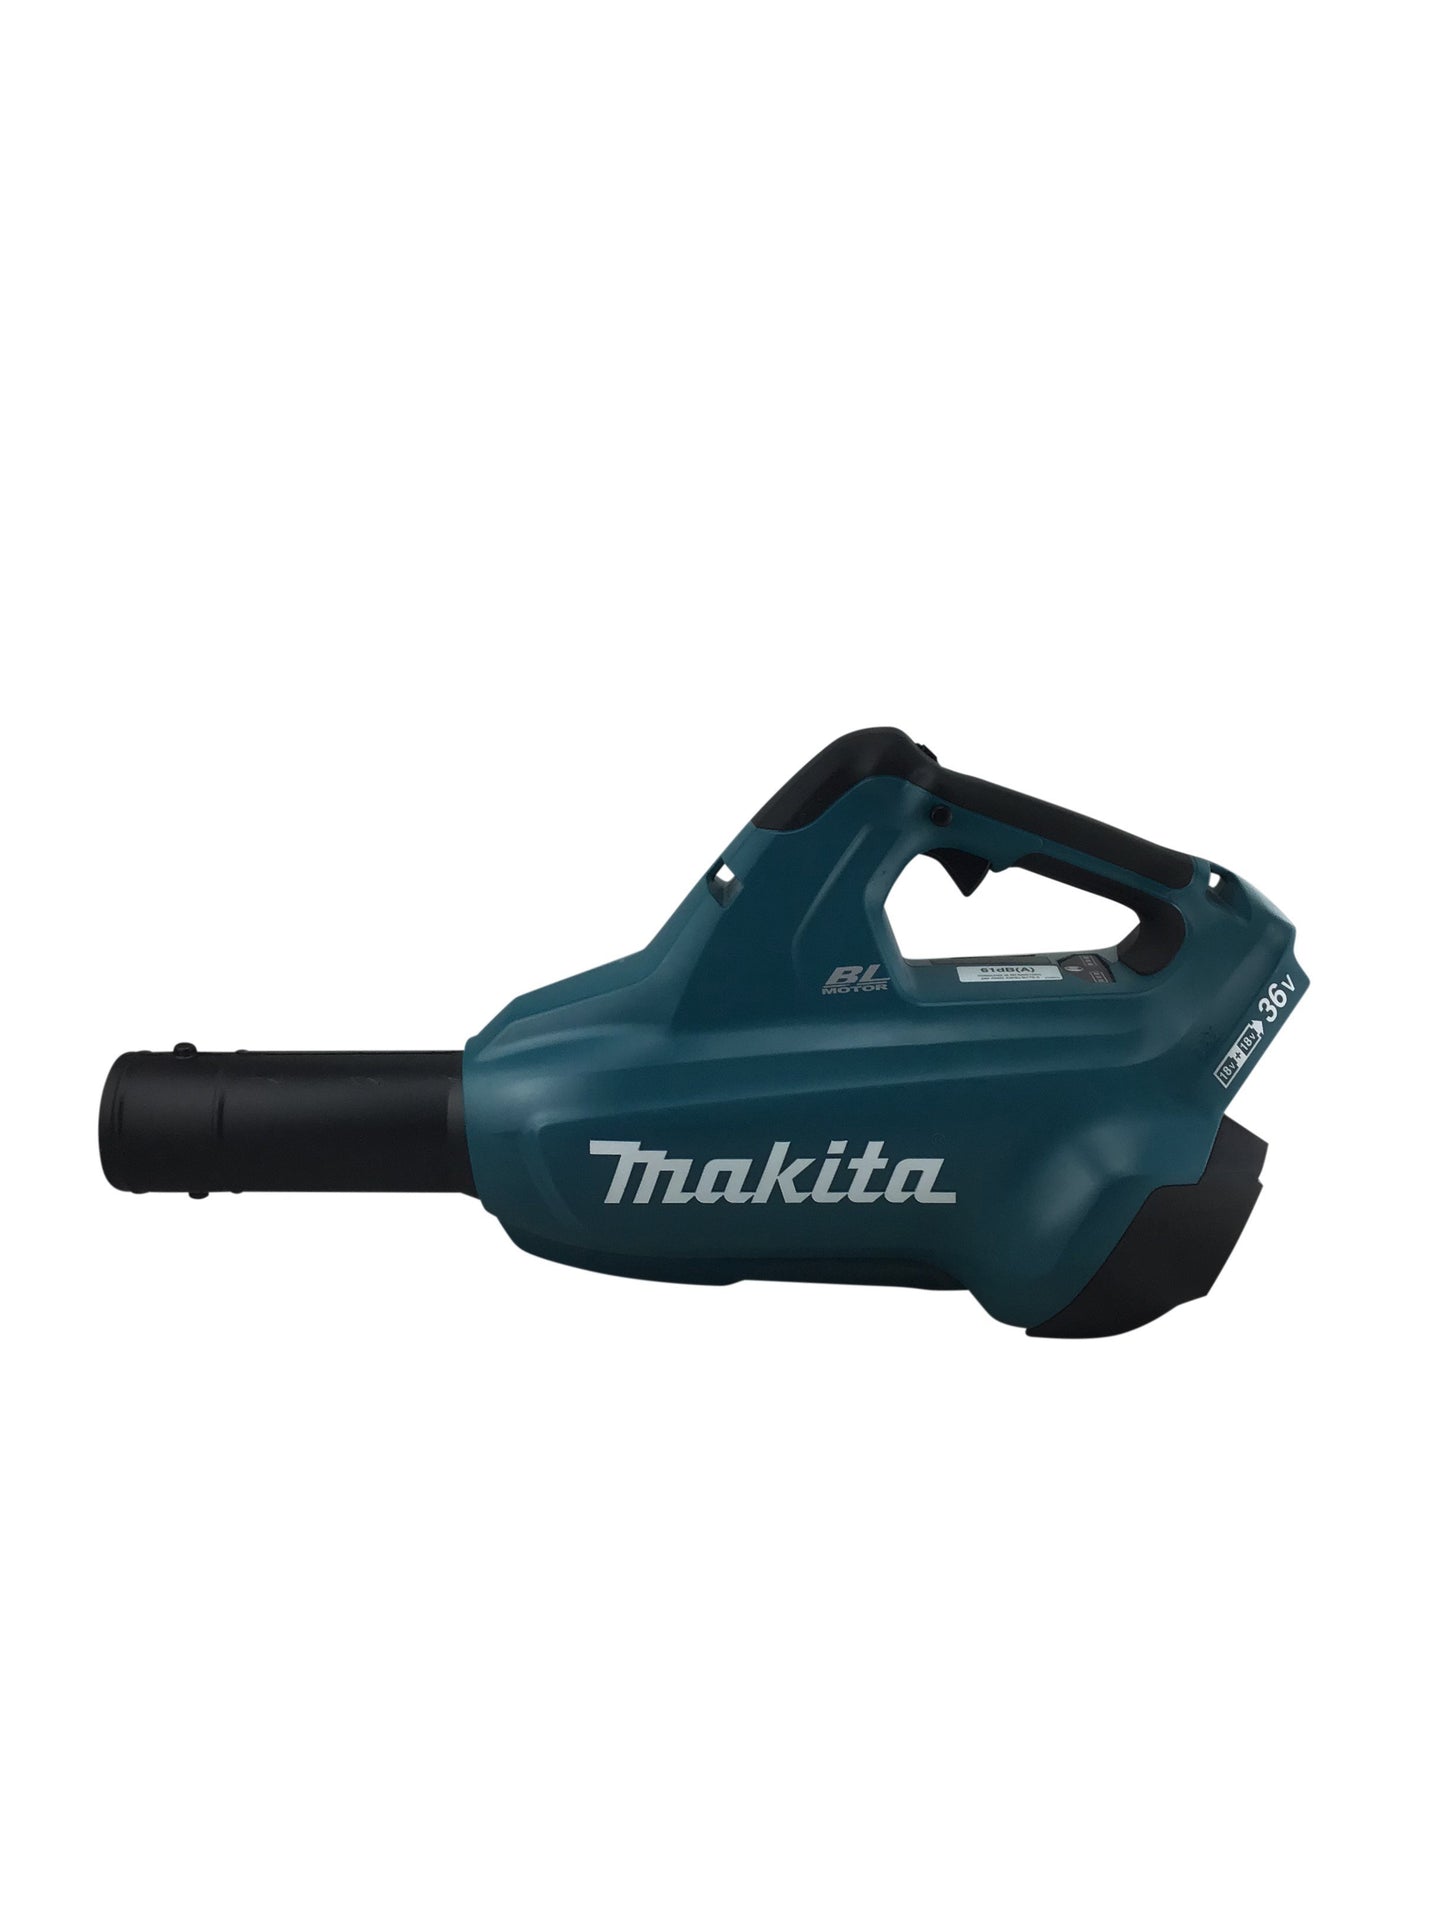 Makita Reconditioned Brushless Blower Kit-Makita-Tool Mart Inc.